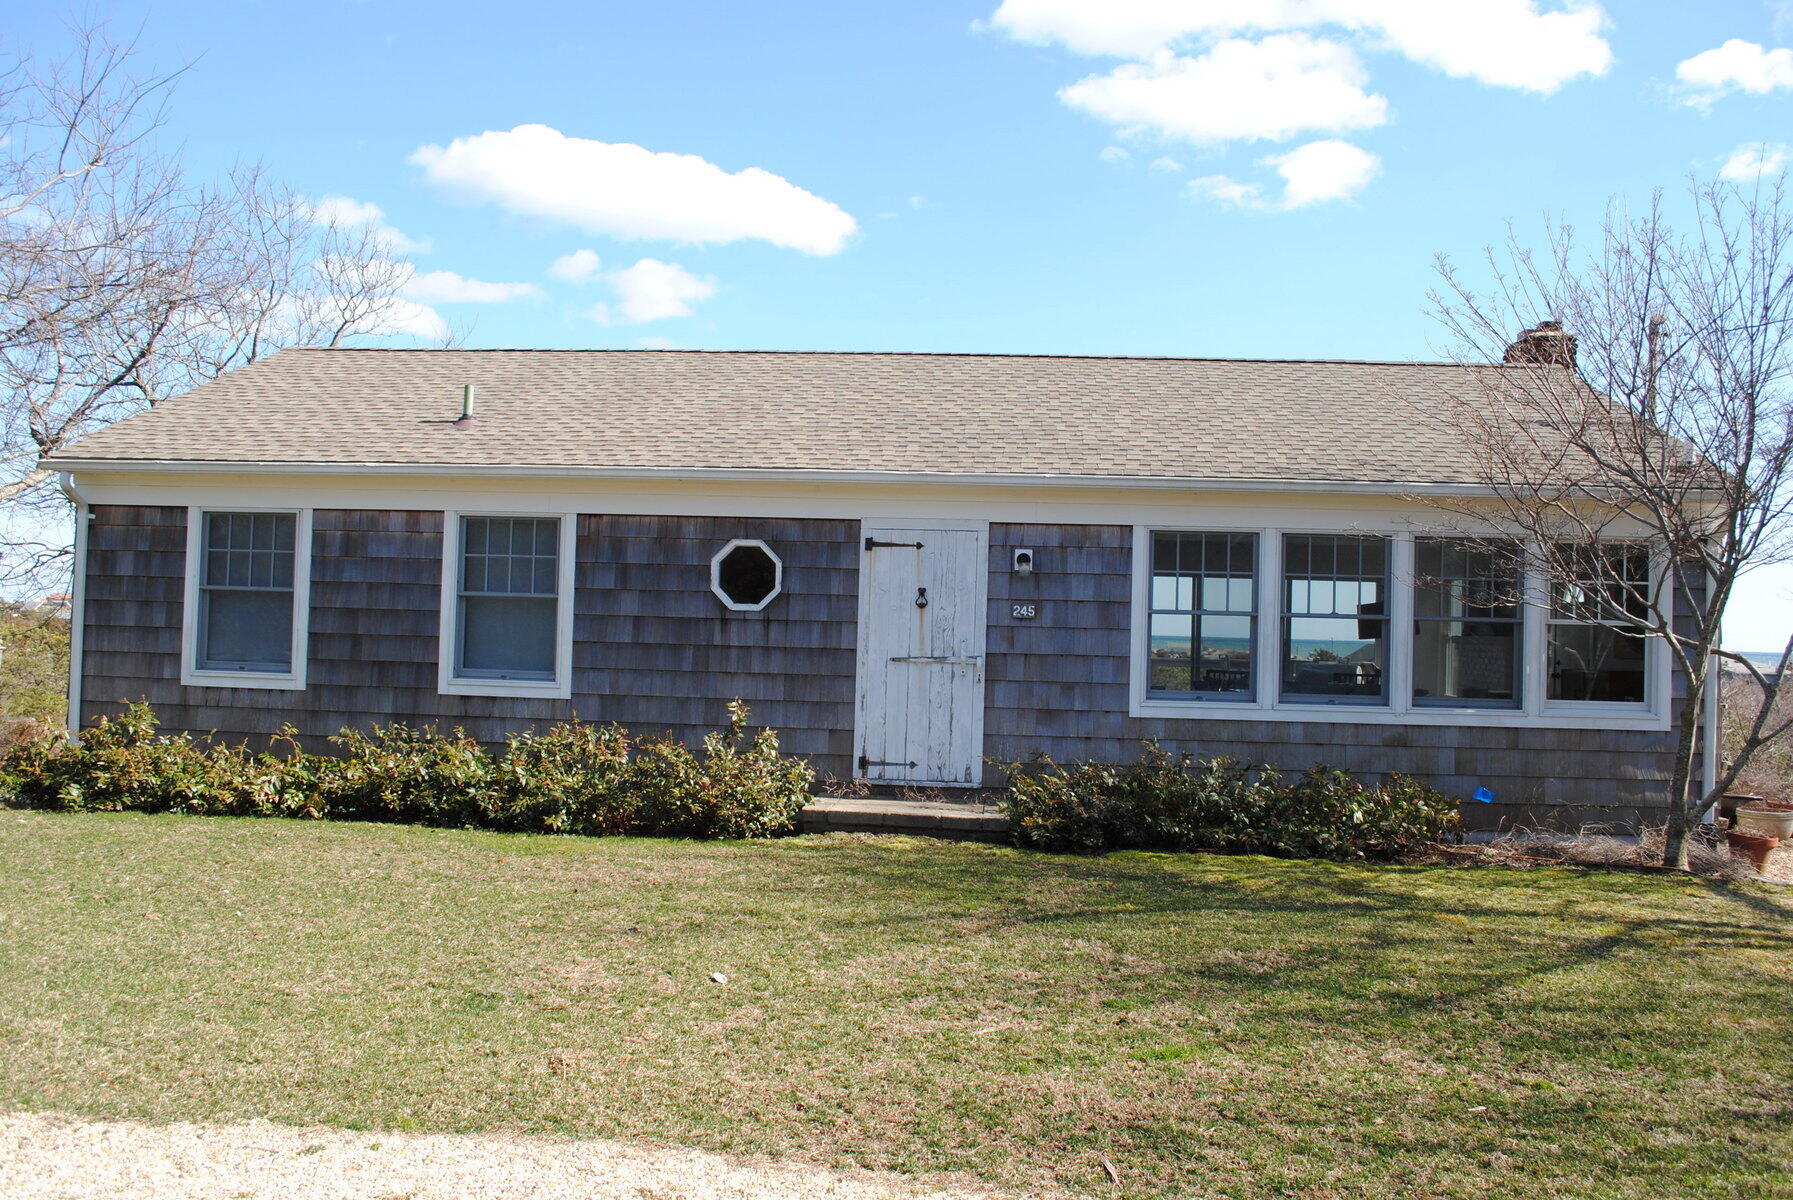 Rental Property at Amagansett, Amagansett, Hamptons, NY - Bedrooms: 3 
Bathrooms: 2  - $42,000 MO.